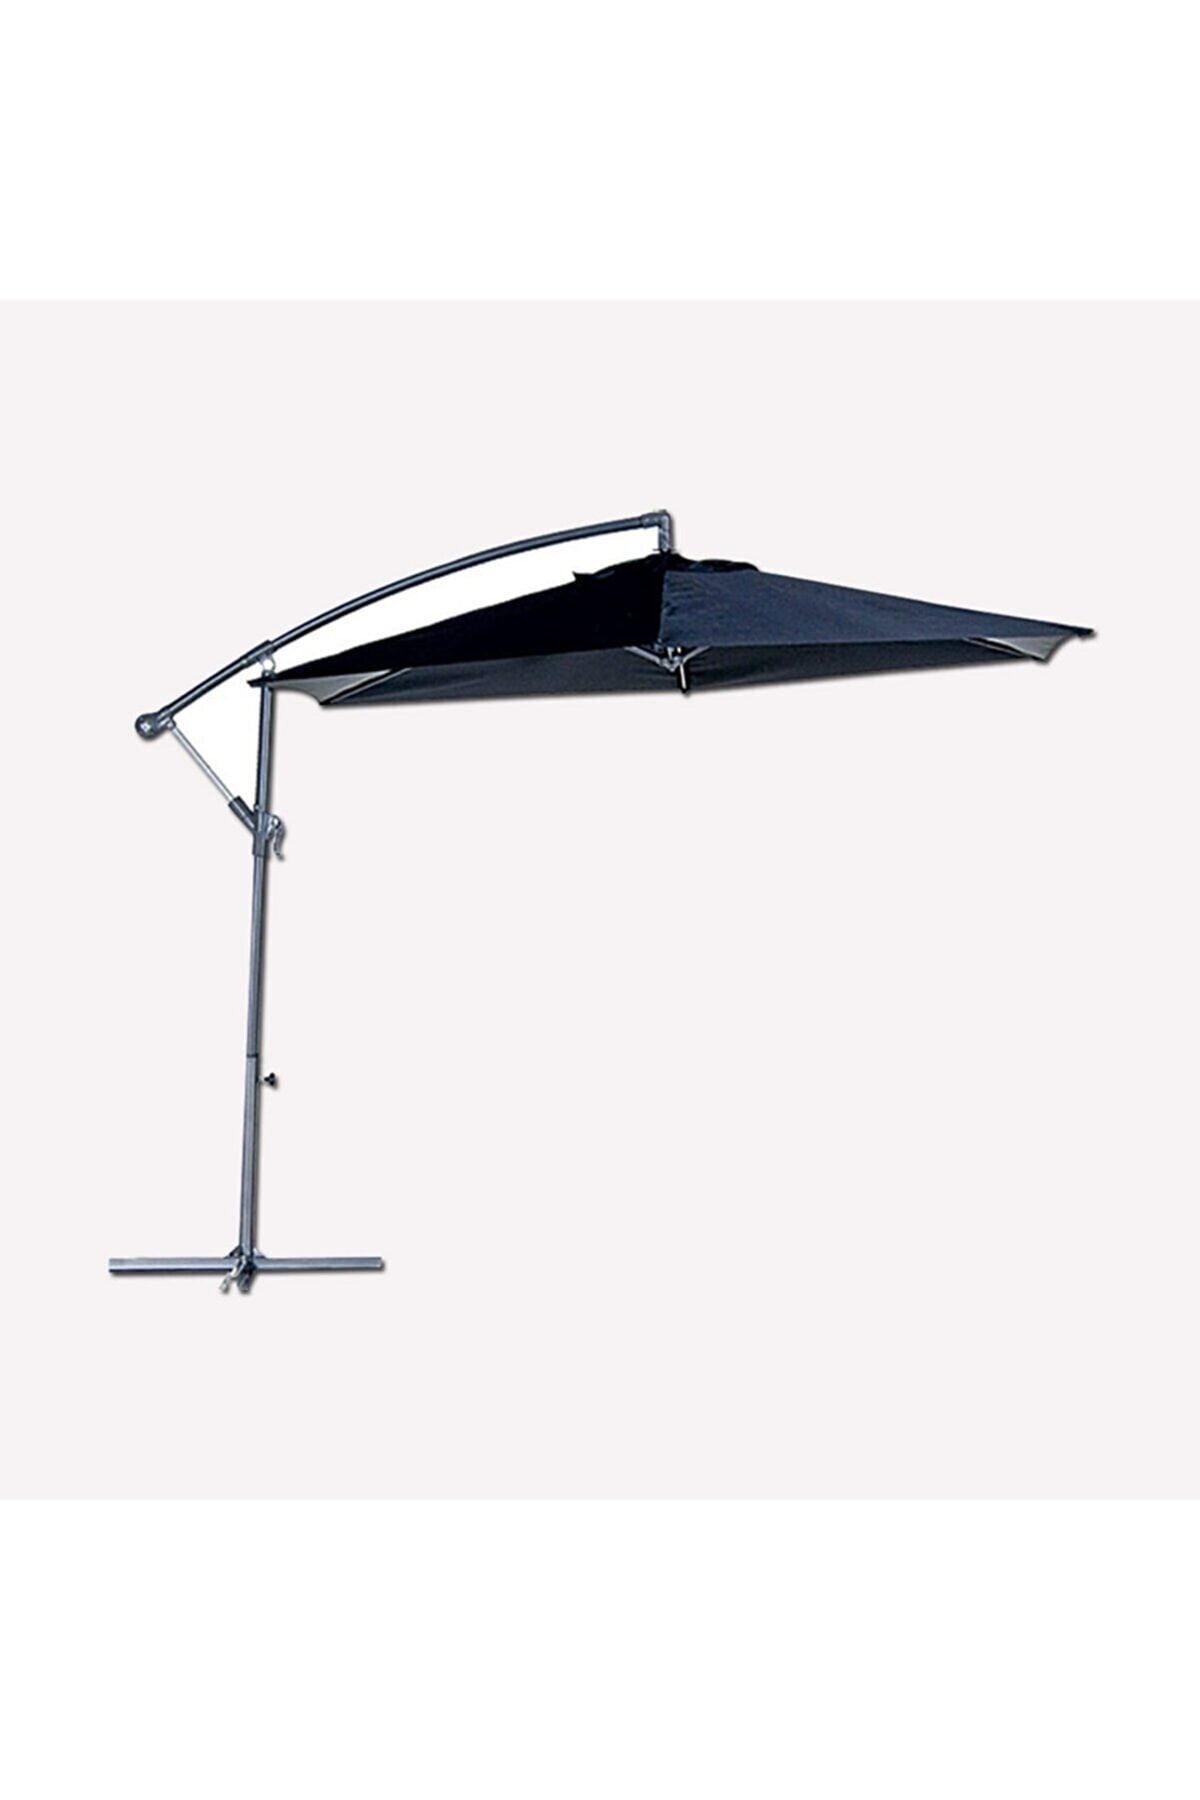 Bidesenal Makaralı Sistem Bahçe Şemsiyesi, Ampül Şemsiye, 300cm Polyester Bahçe Şemsiyesi Aş06